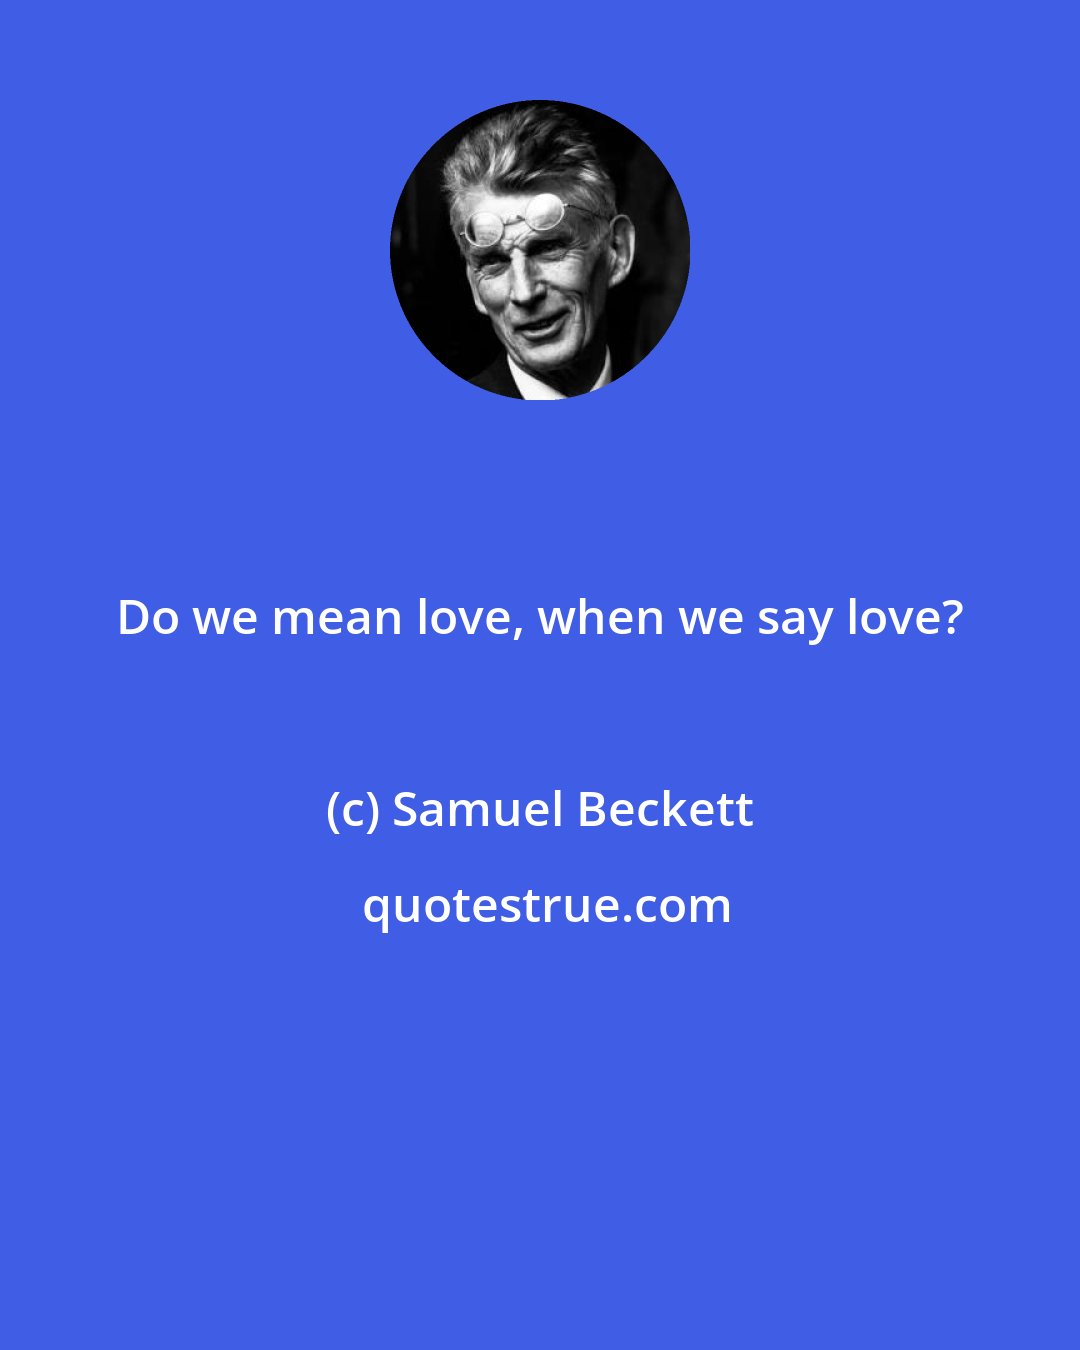 Samuel Beckett: Do we mean love, when we say love?